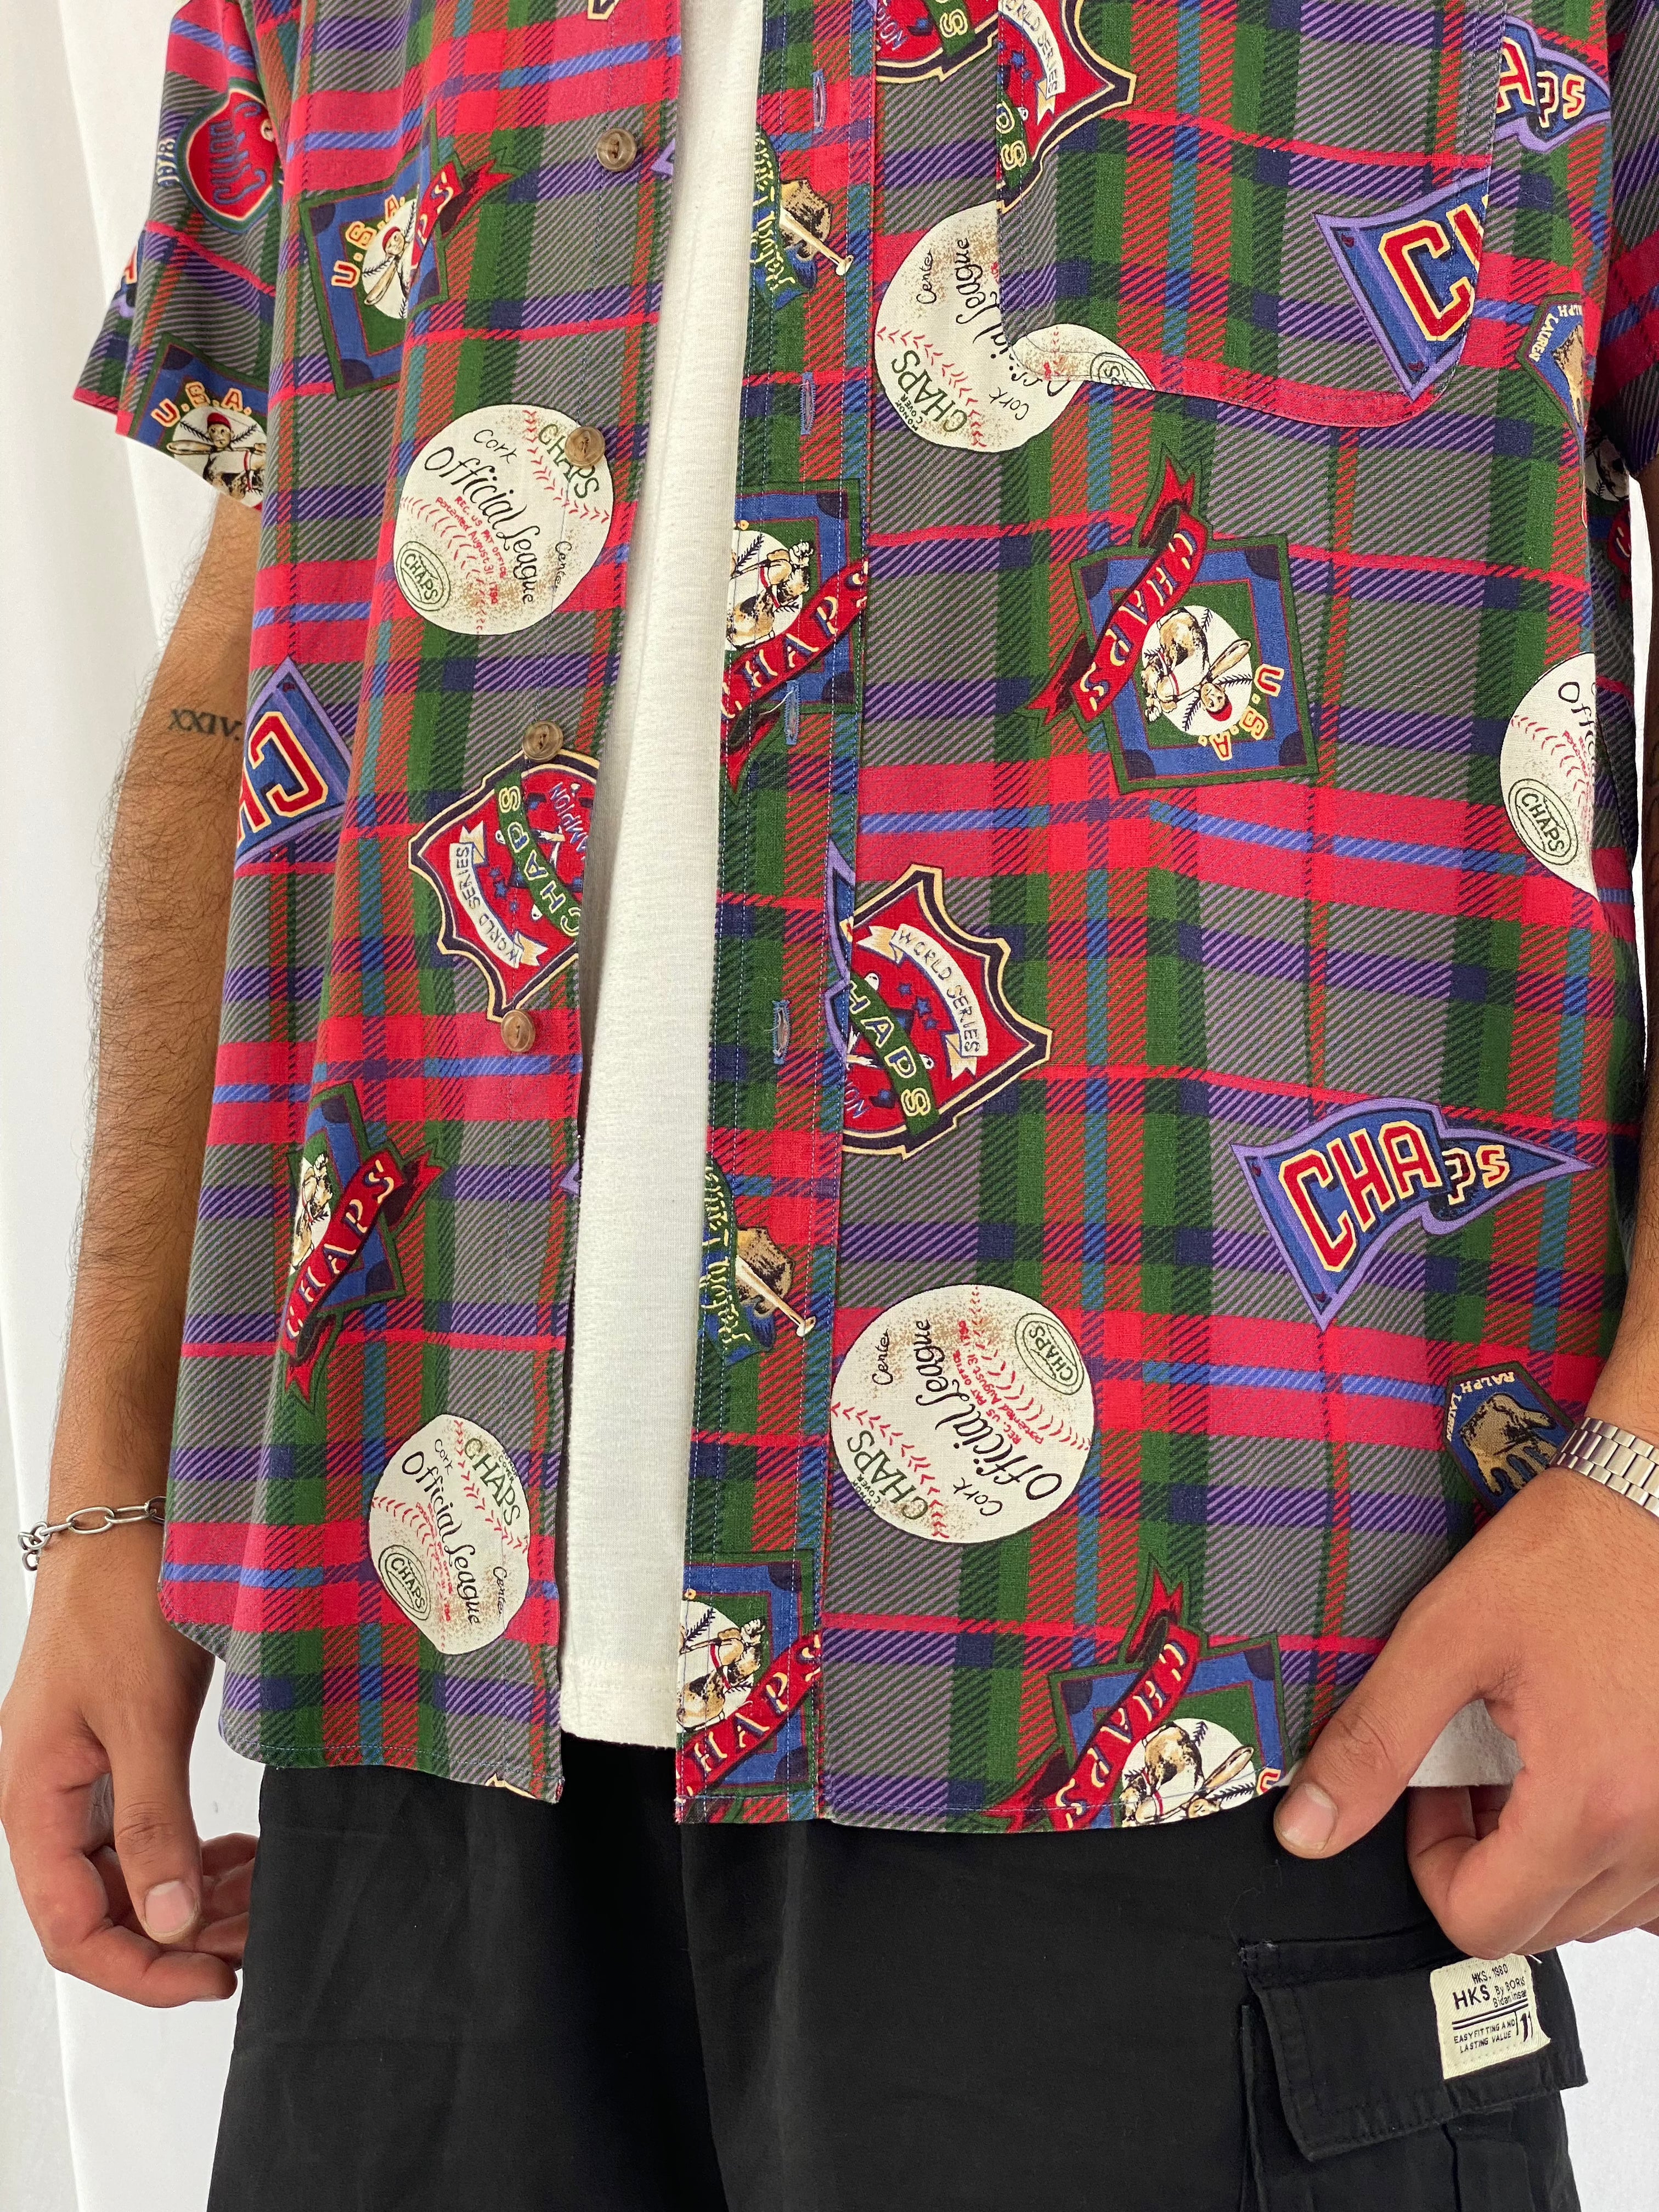 Vintage Chaps Ralph Lauren Denim Shirt Long Sleeve Button Up Men's